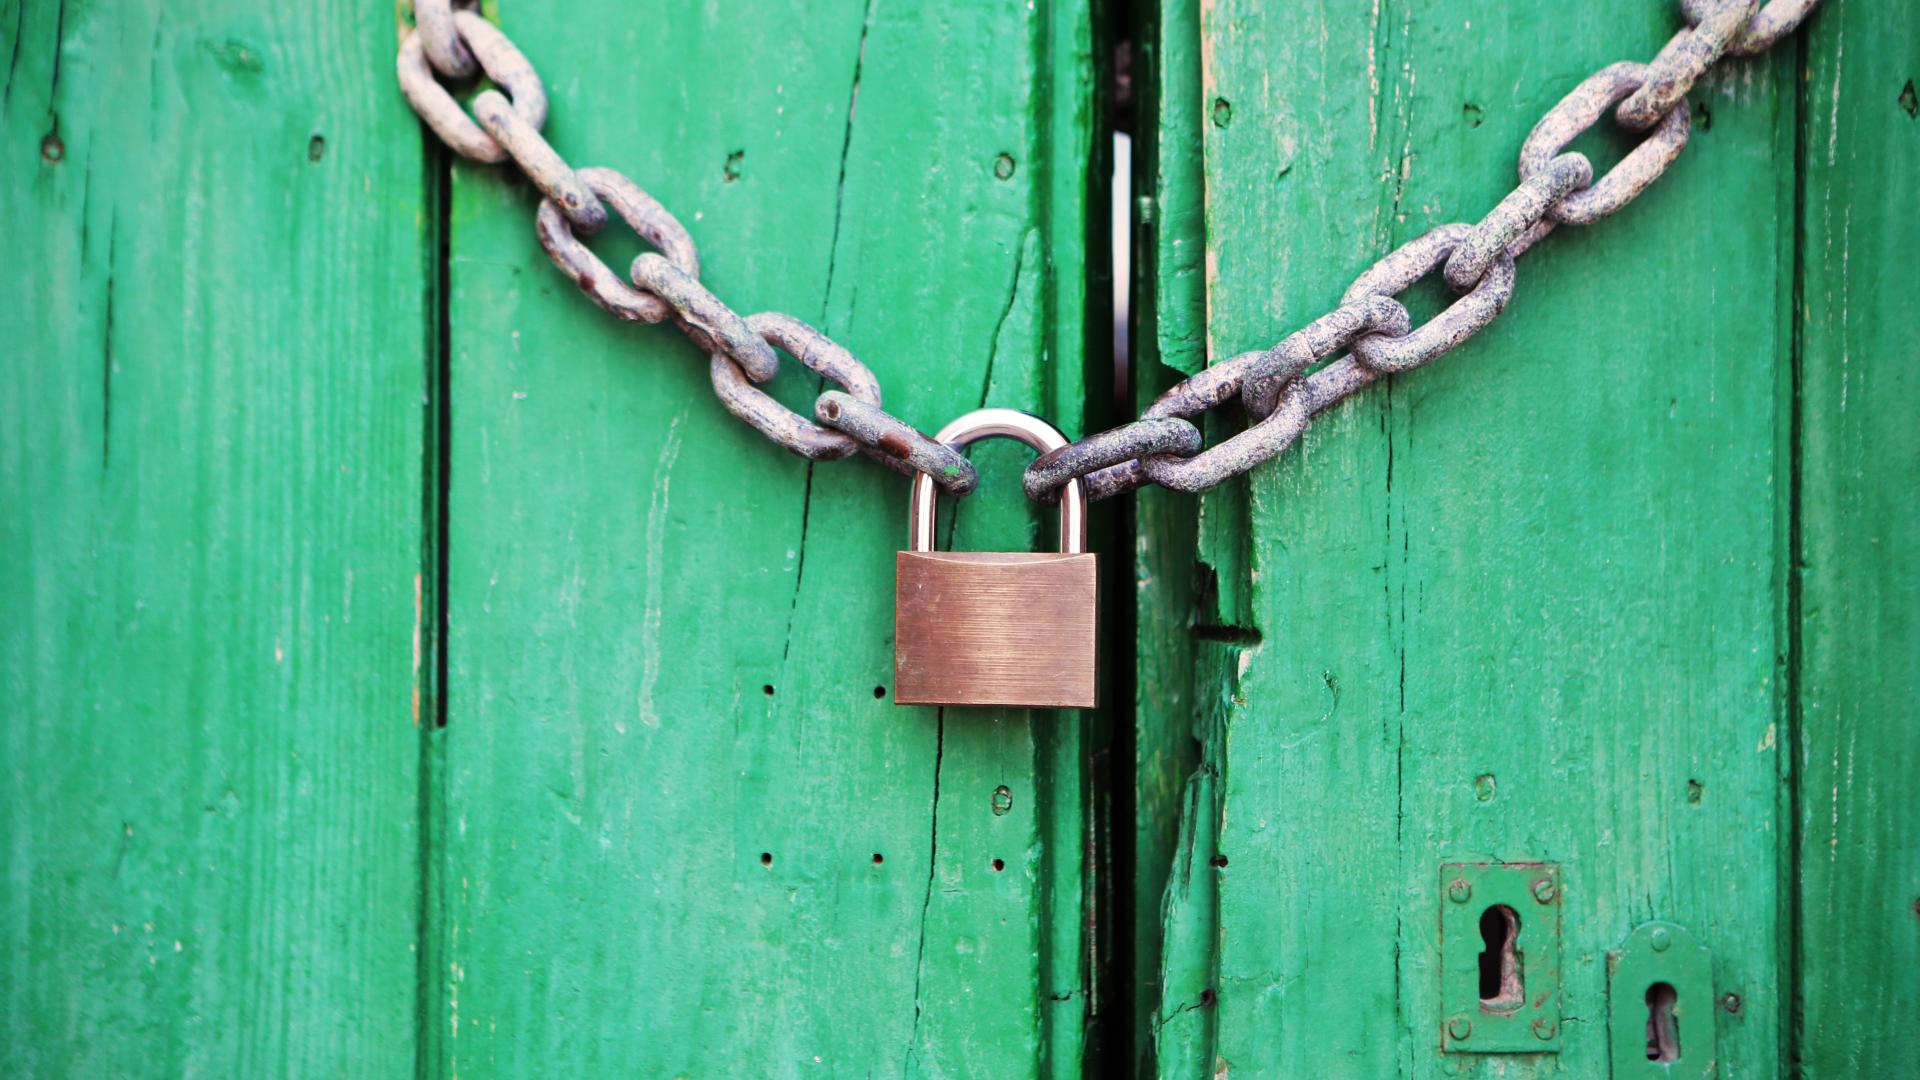 Lock and chain on green door